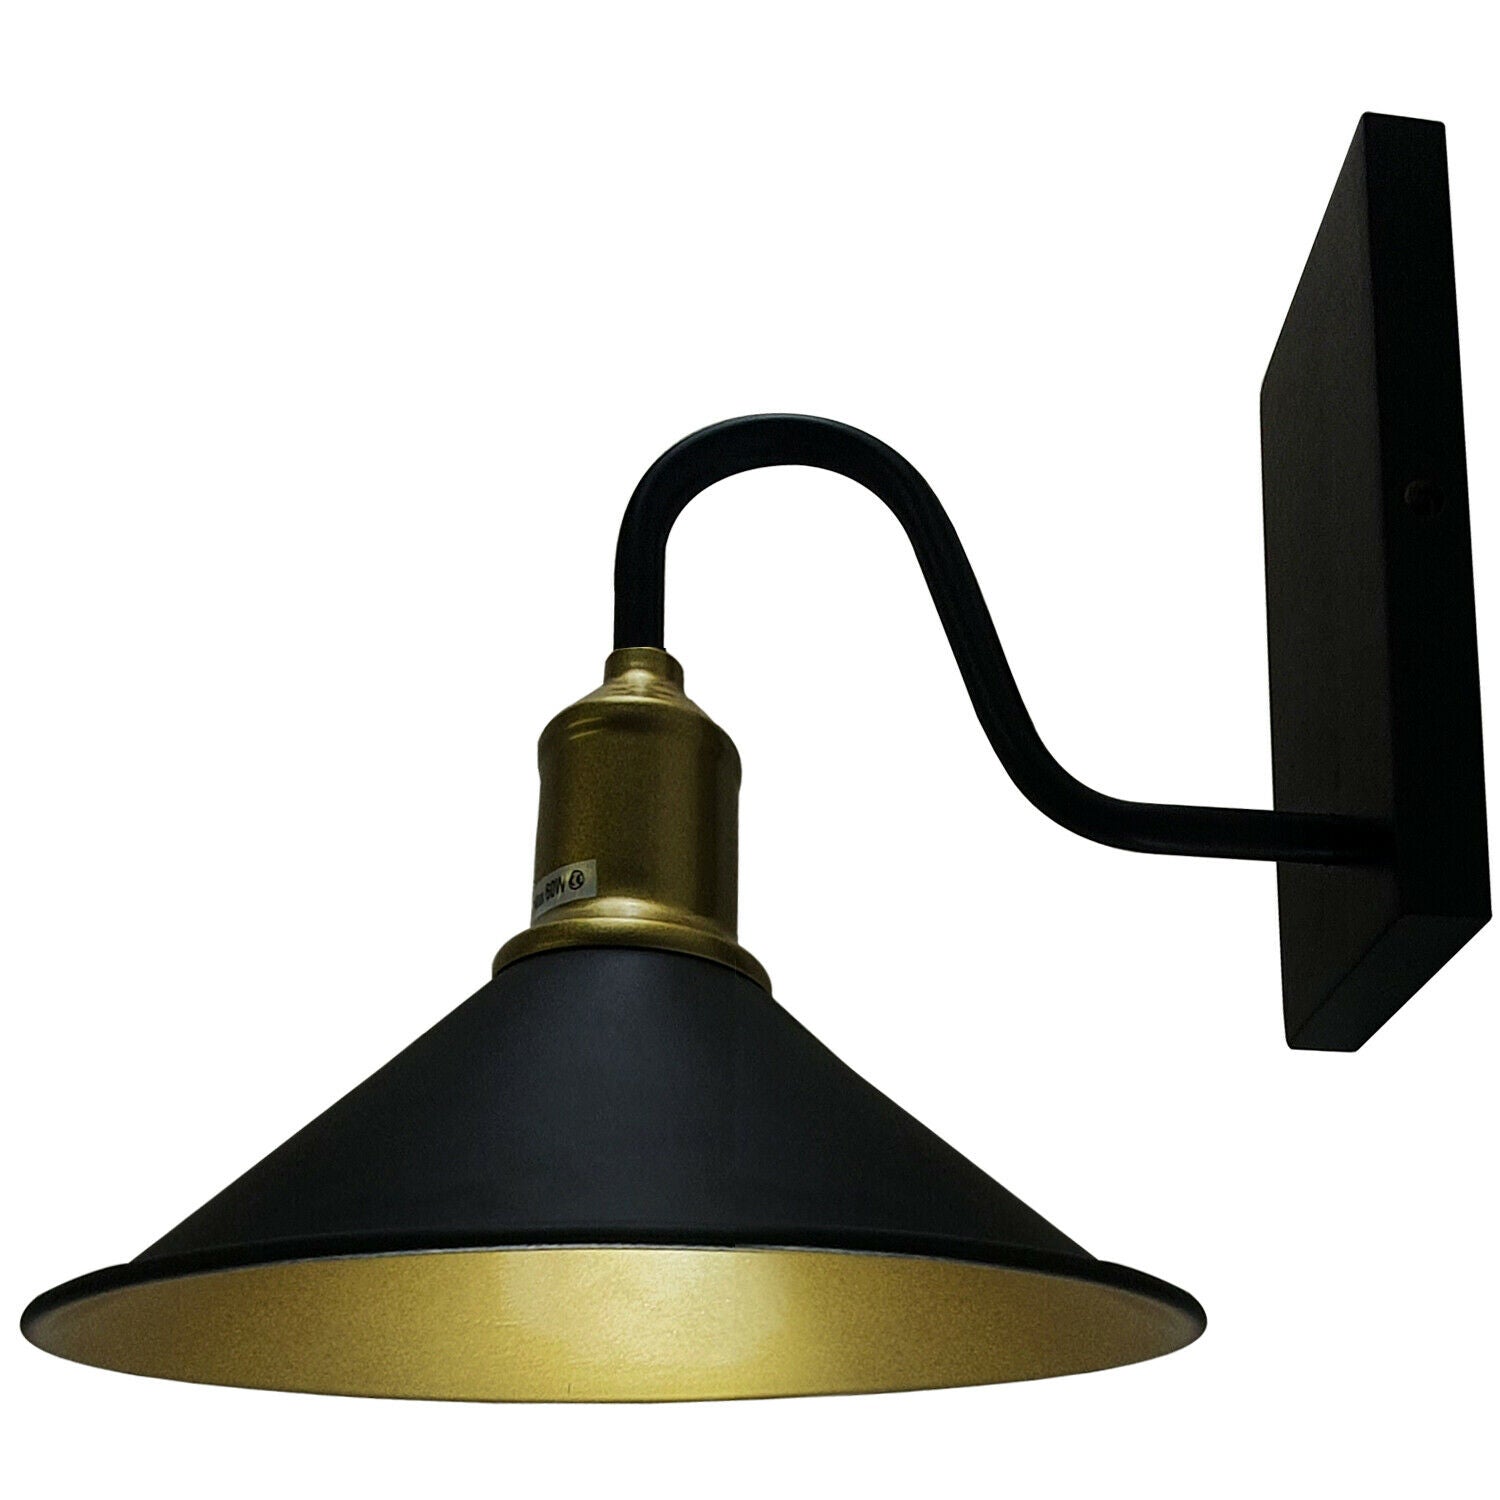 Modern Vintage Retro Industrial Rustic Sconce Wall Light Lamp Fitting Fixture~1545 - LEDSone UK Ltd